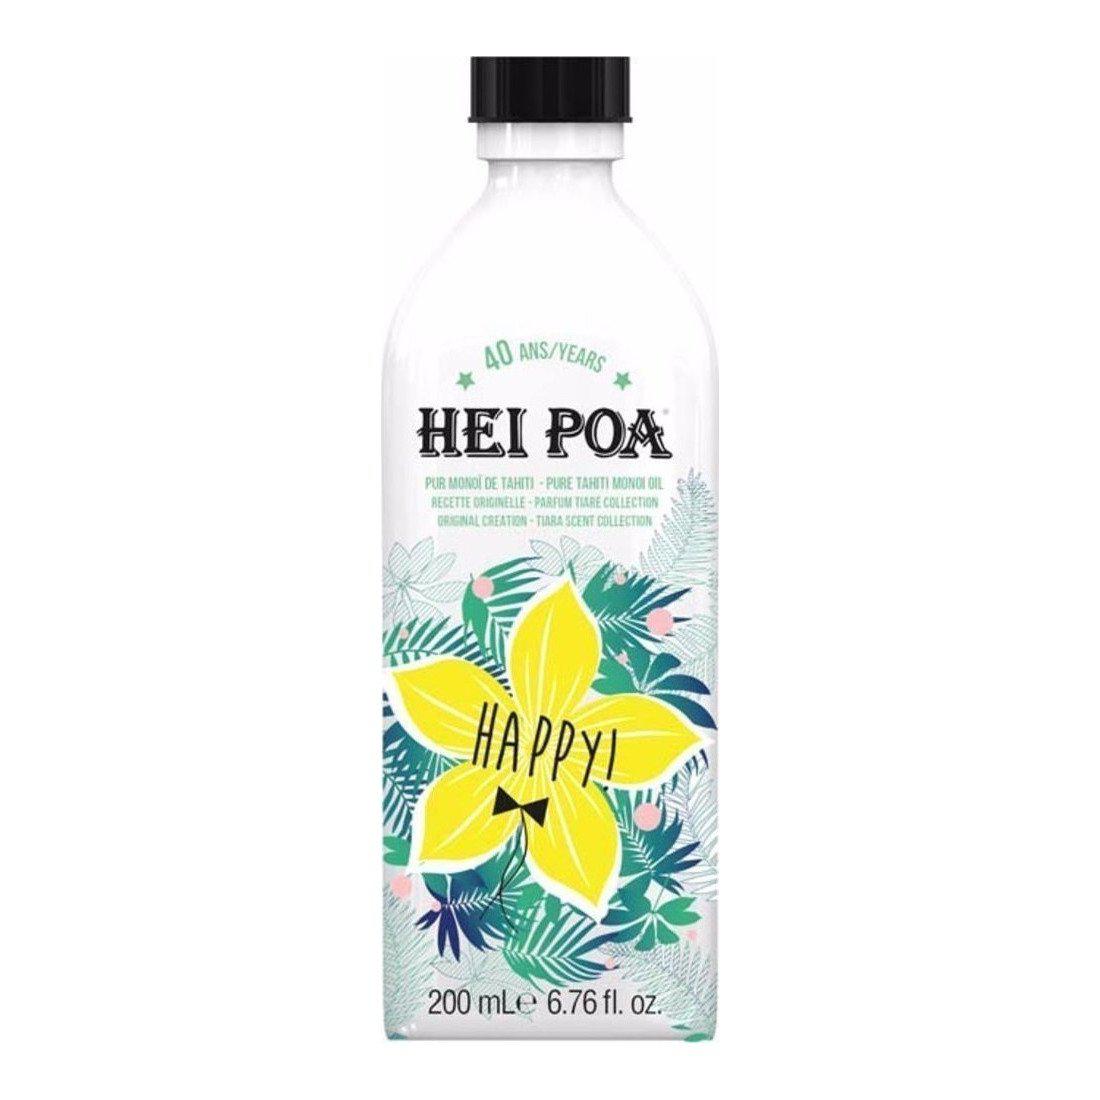 Hei Poa Happy Monoi Oil Tiare Limited Edition 40 Years 100mL